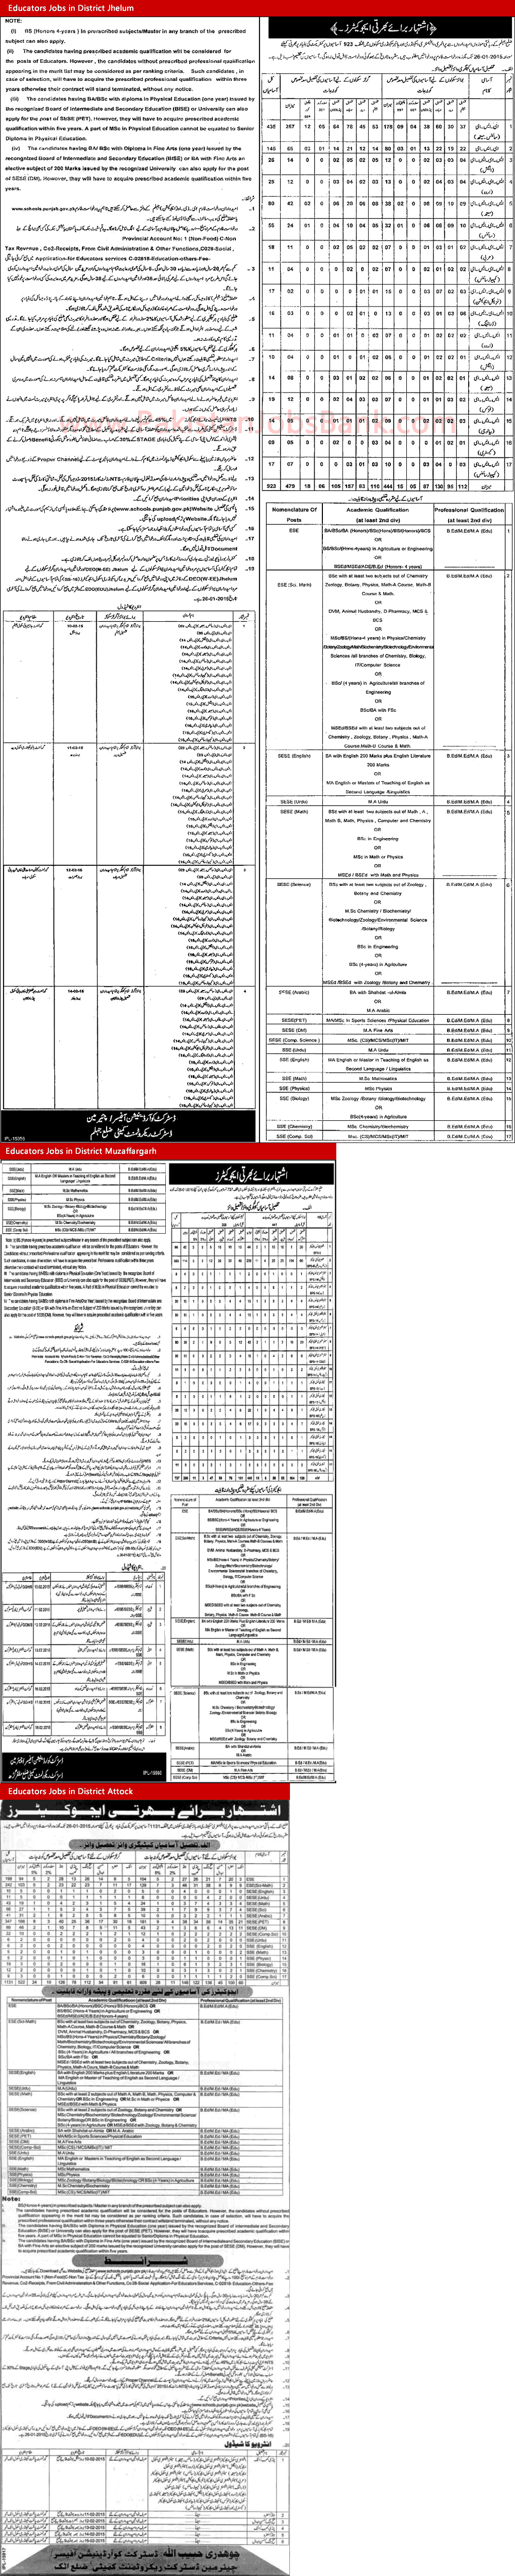 Educators Jobs in Jhelum / Attock / Muzaffargarh Districts 2014 December Application Form Download